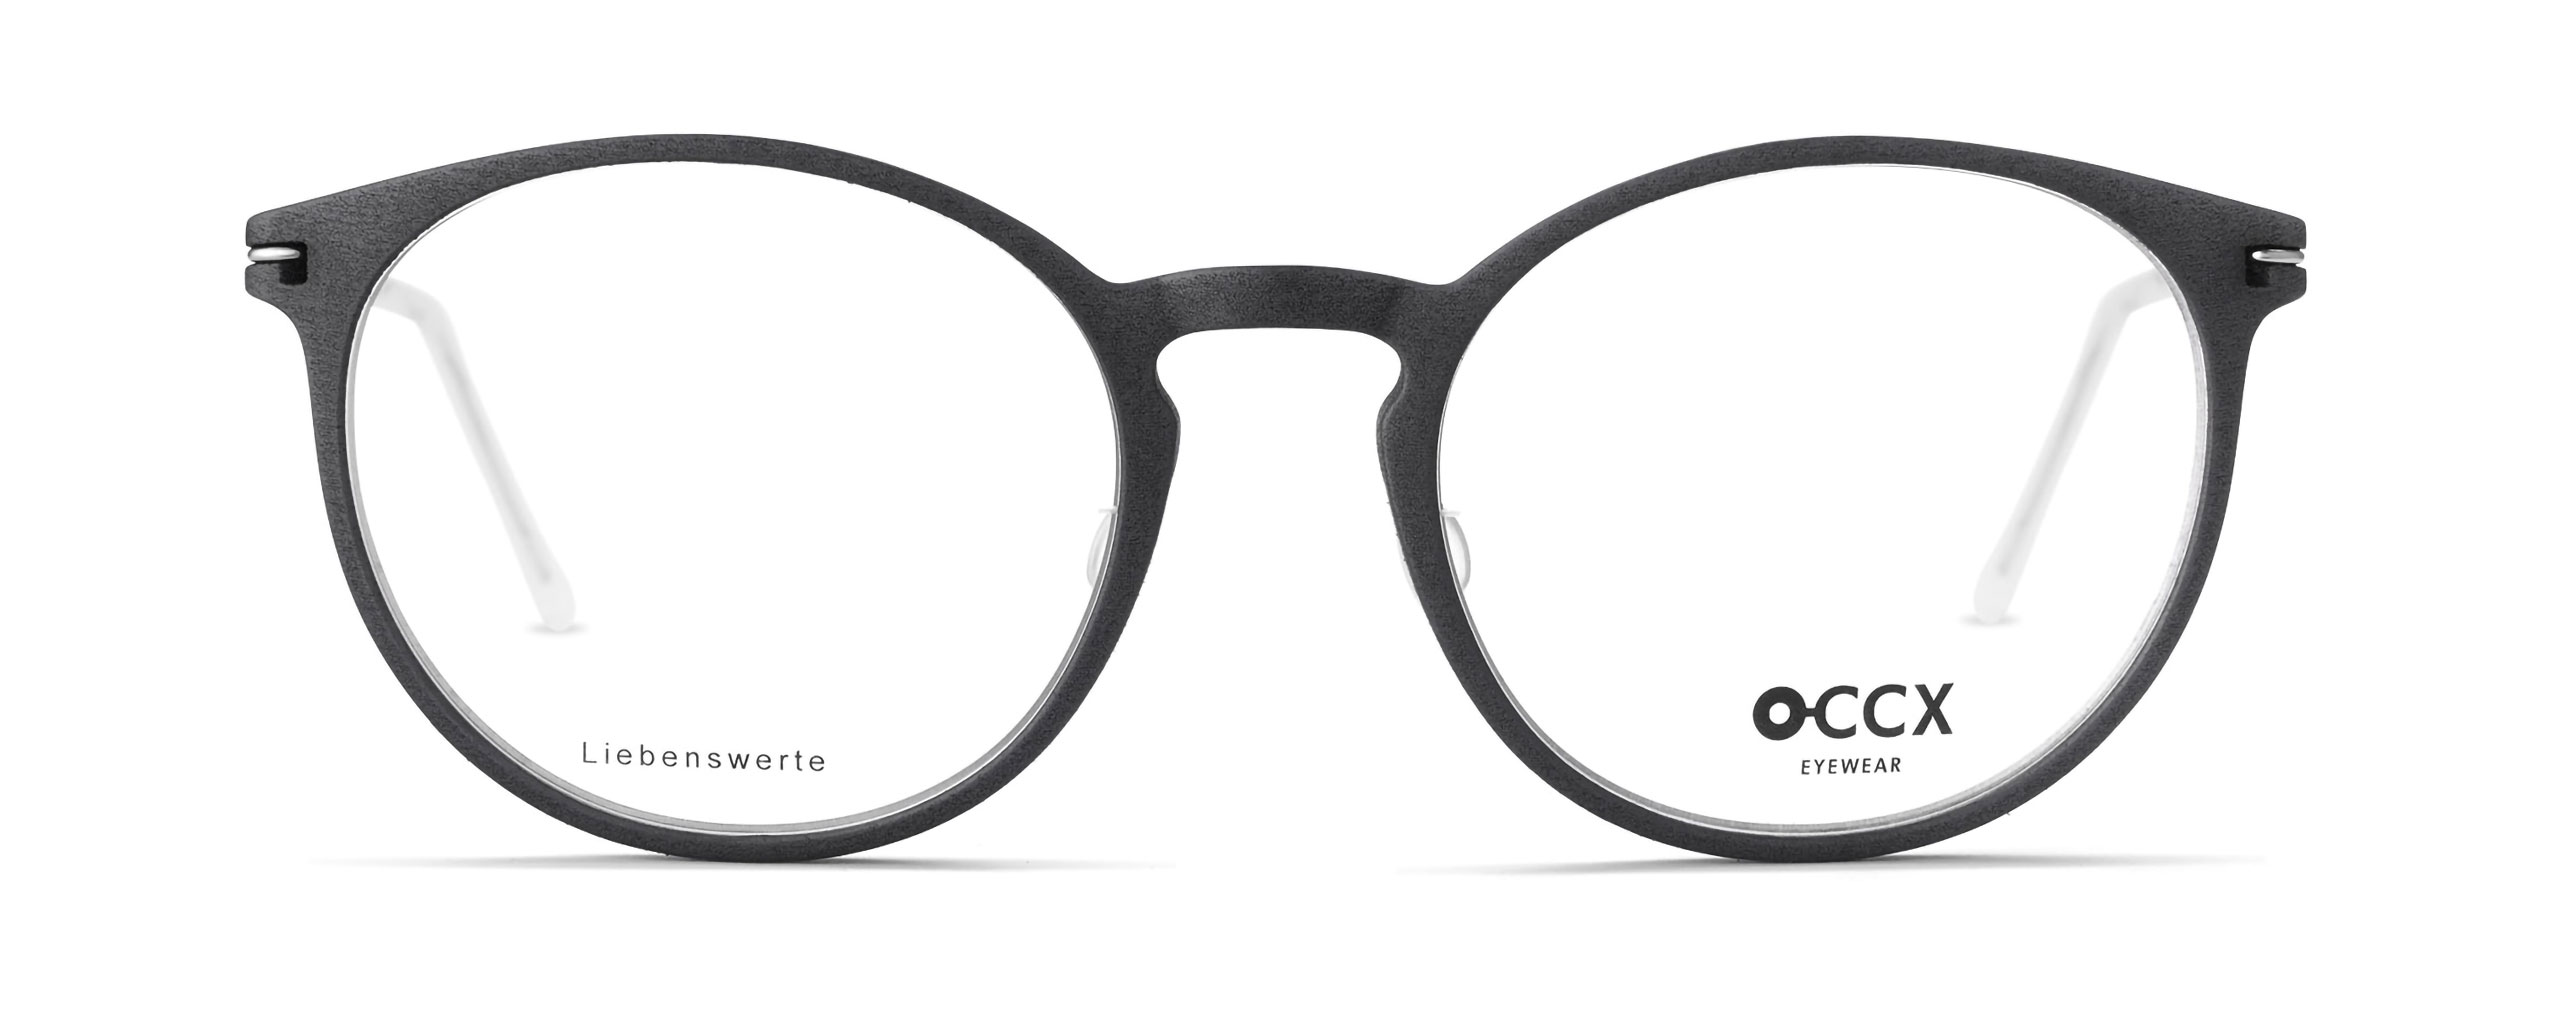 O-CCX Eyewear Avantgarde Liebenswerte Schiefergrau